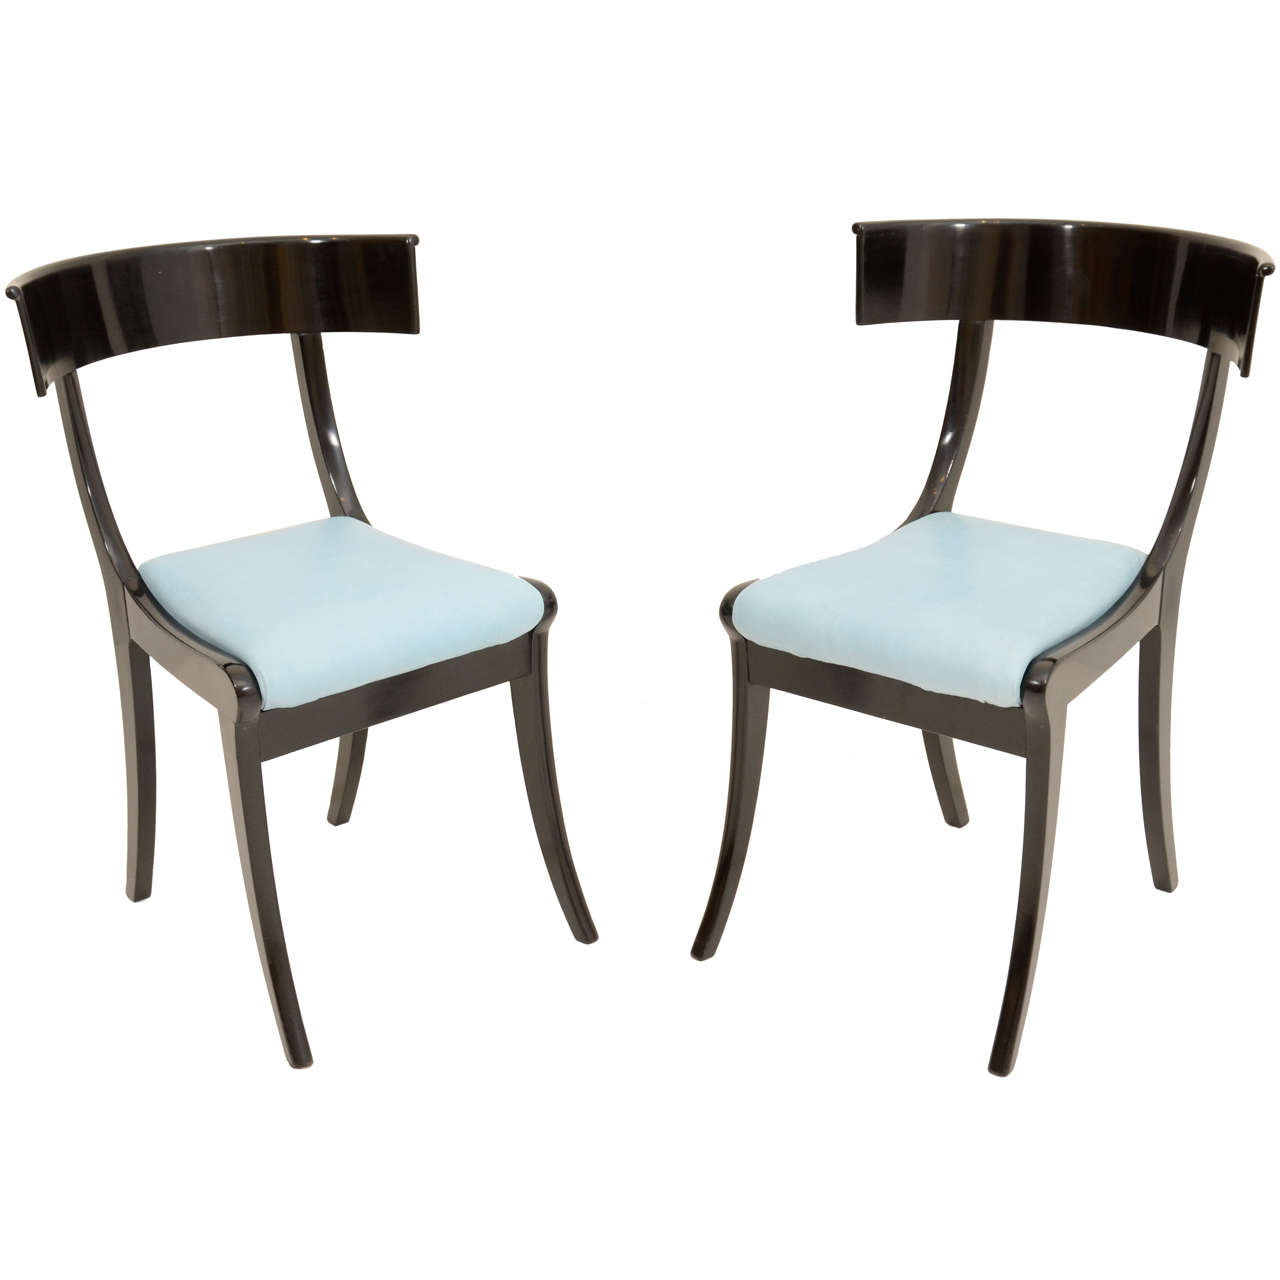 A Pair of Danish Klismos Chairs